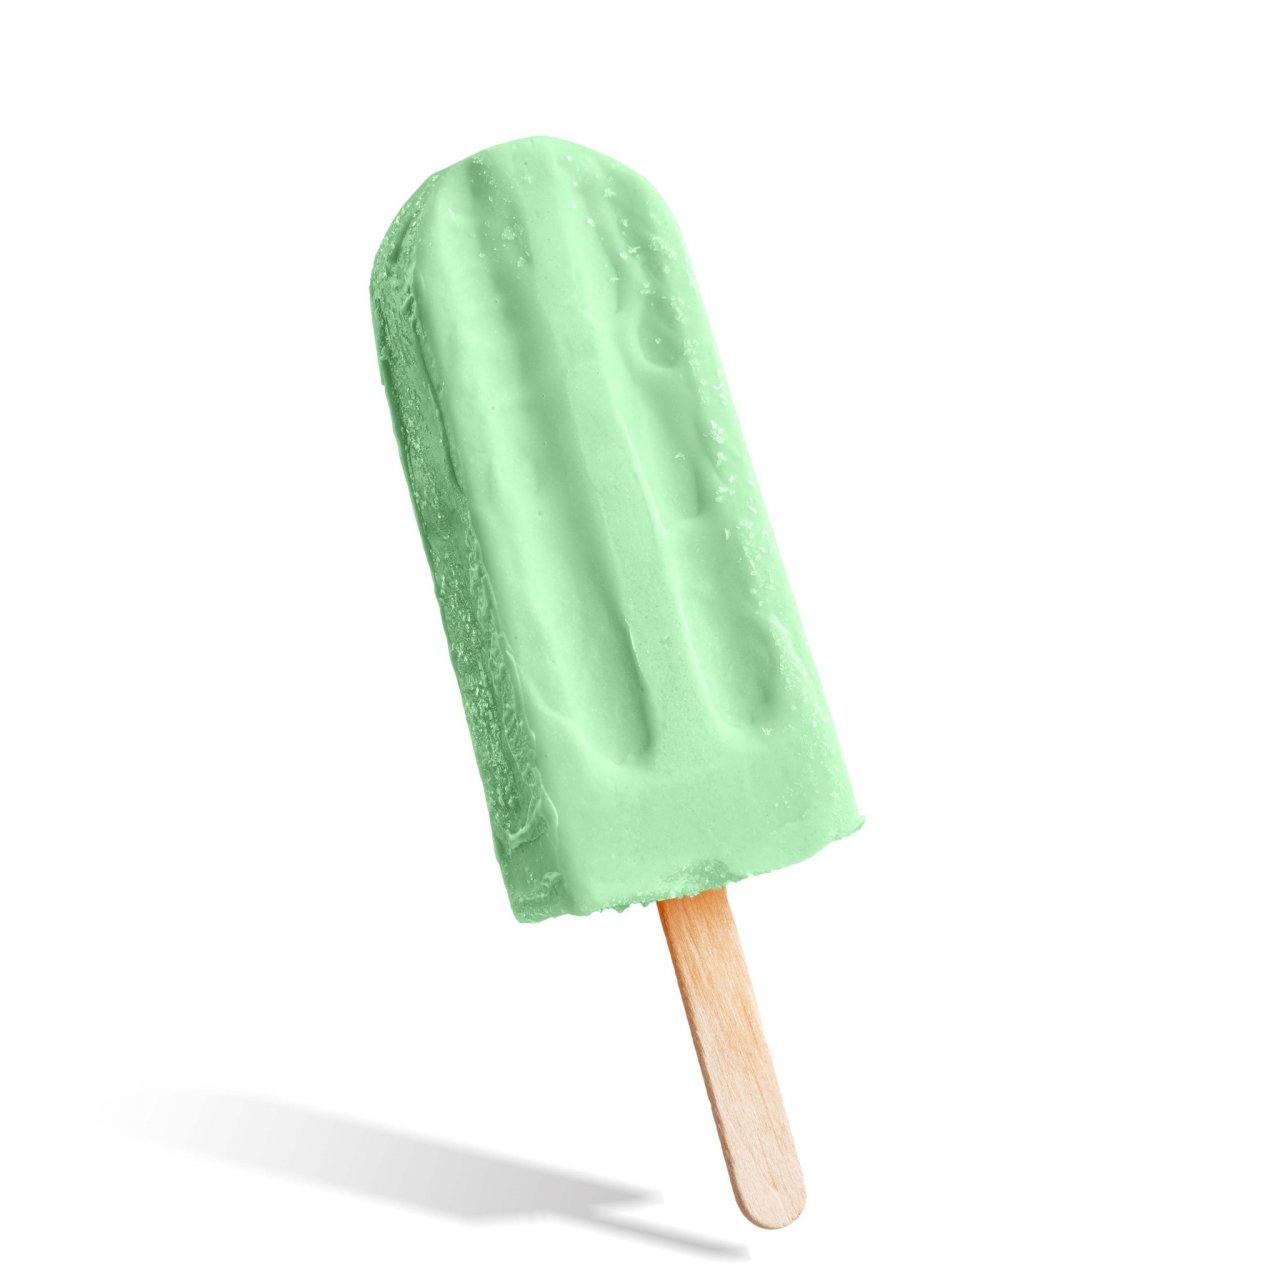 Naked Mint Ice Cream Bar